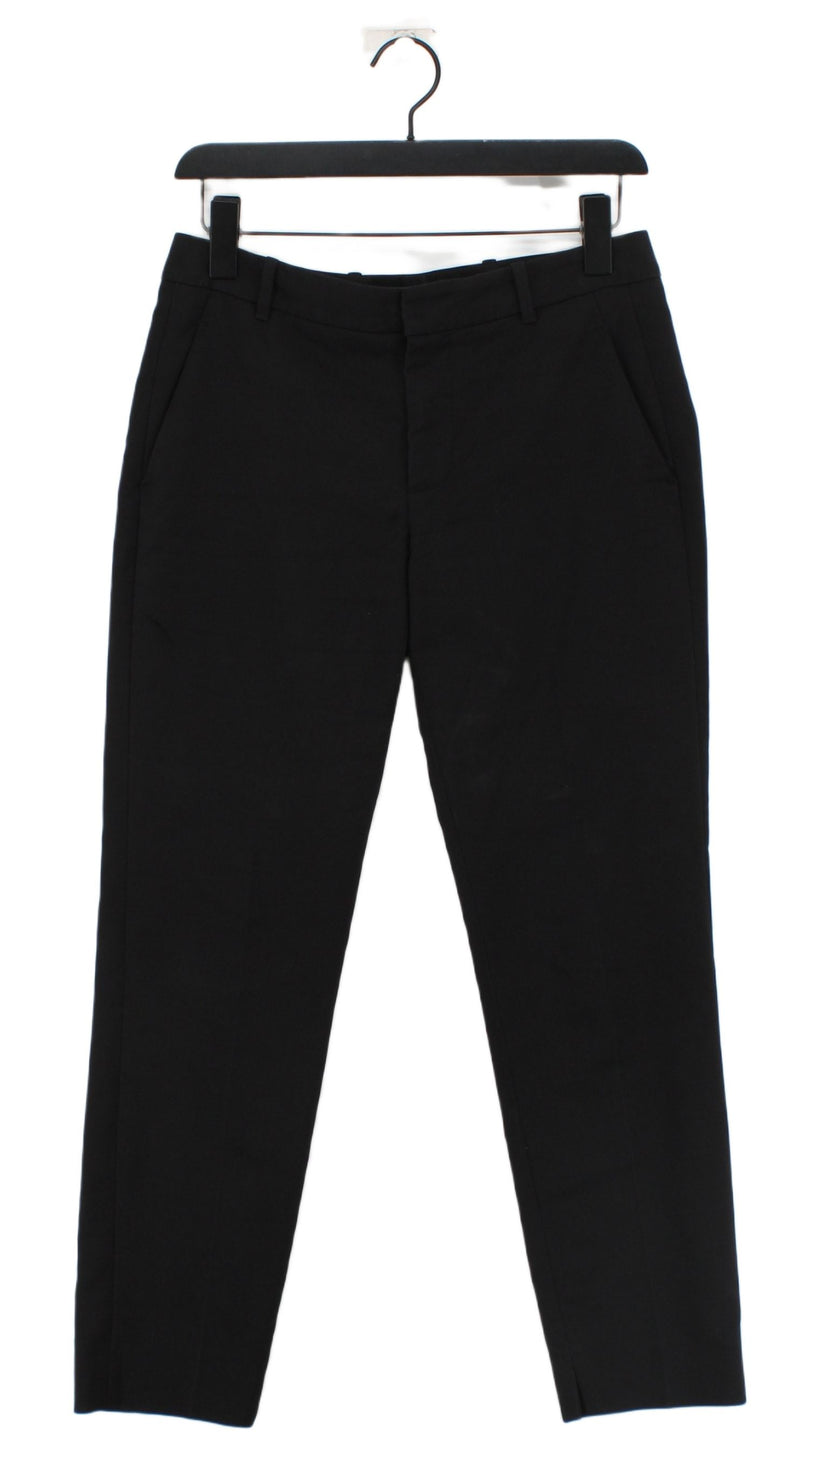 Zara | Pants & Jumpsuits | Zara Womens Dress Pants Trousers Stretch  Polyester Blend Size Xl Grey Cropped | Poshmark